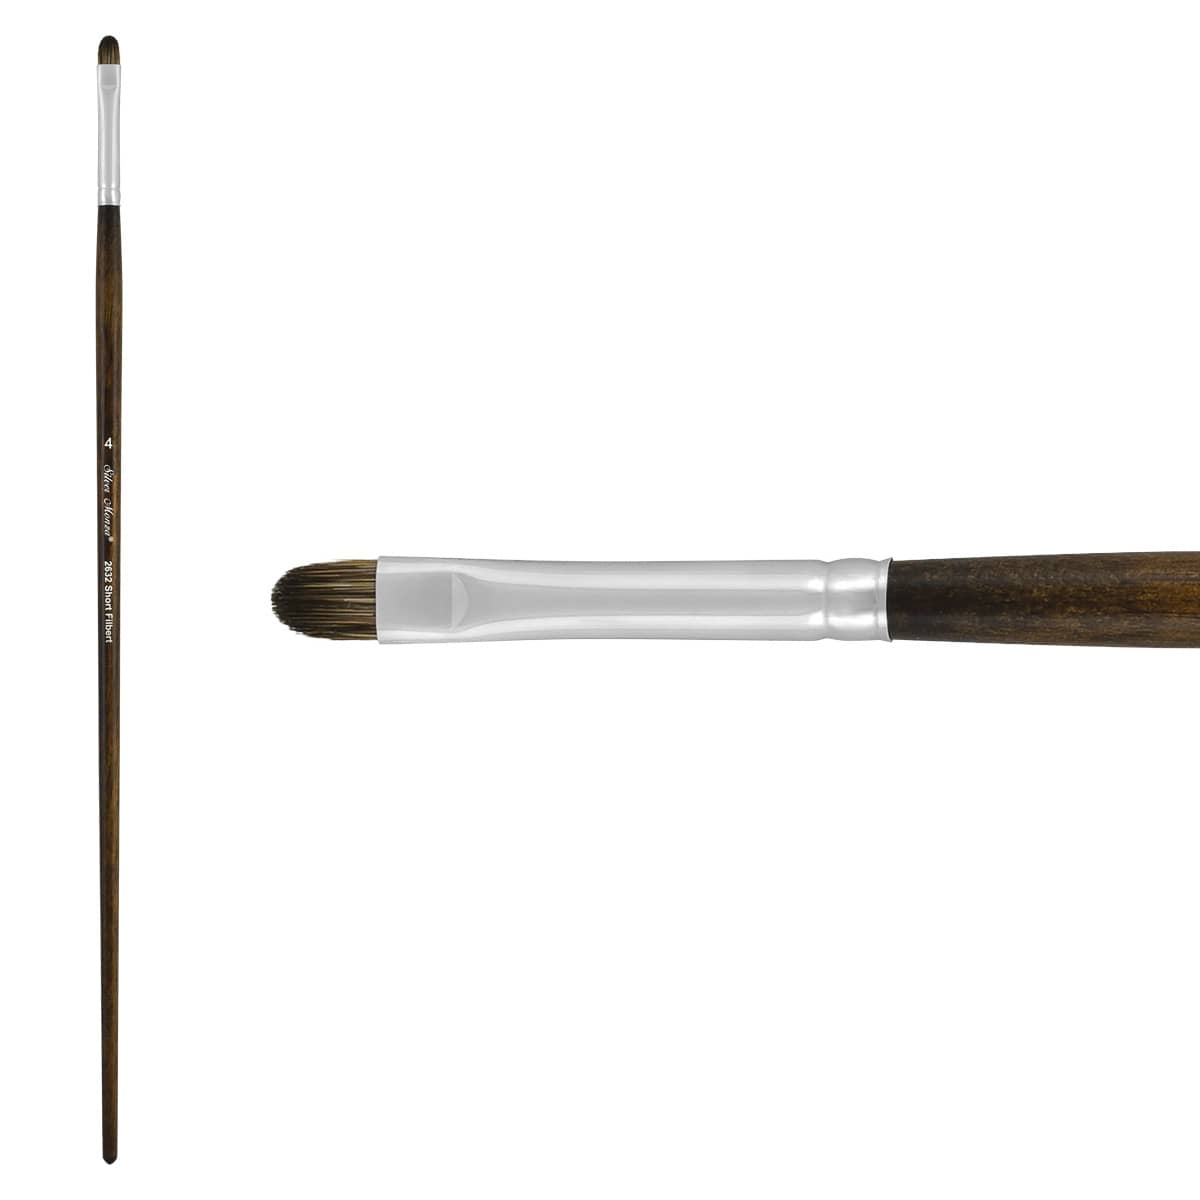 Raphael Stradivrus Synthetic Kolinsky Brush, #4 Rigger